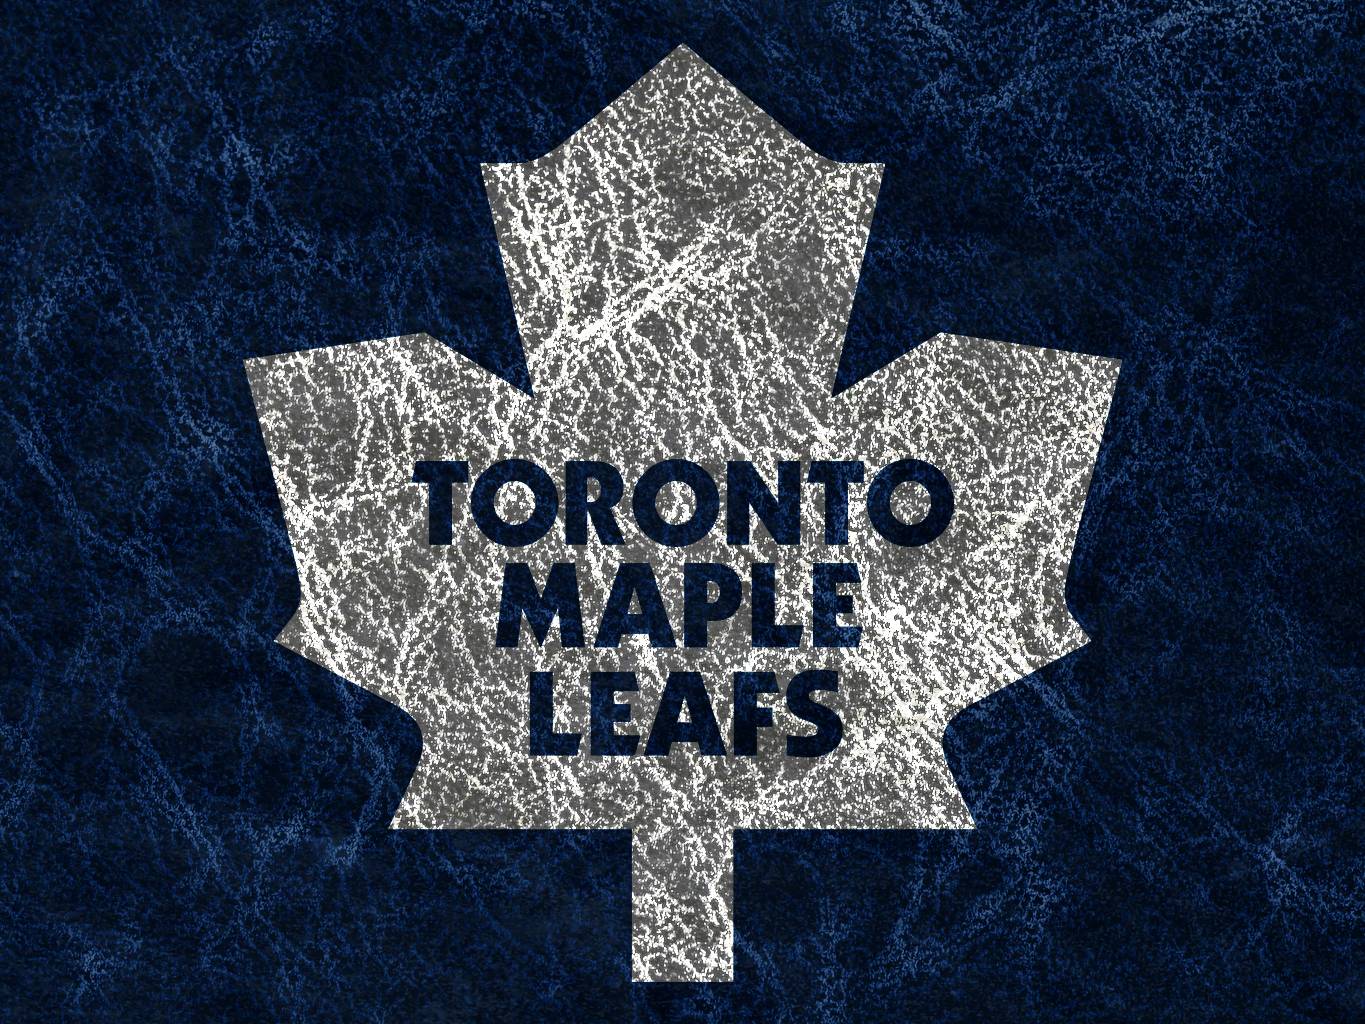 Nhl Toronto Maple Leafs in Sports